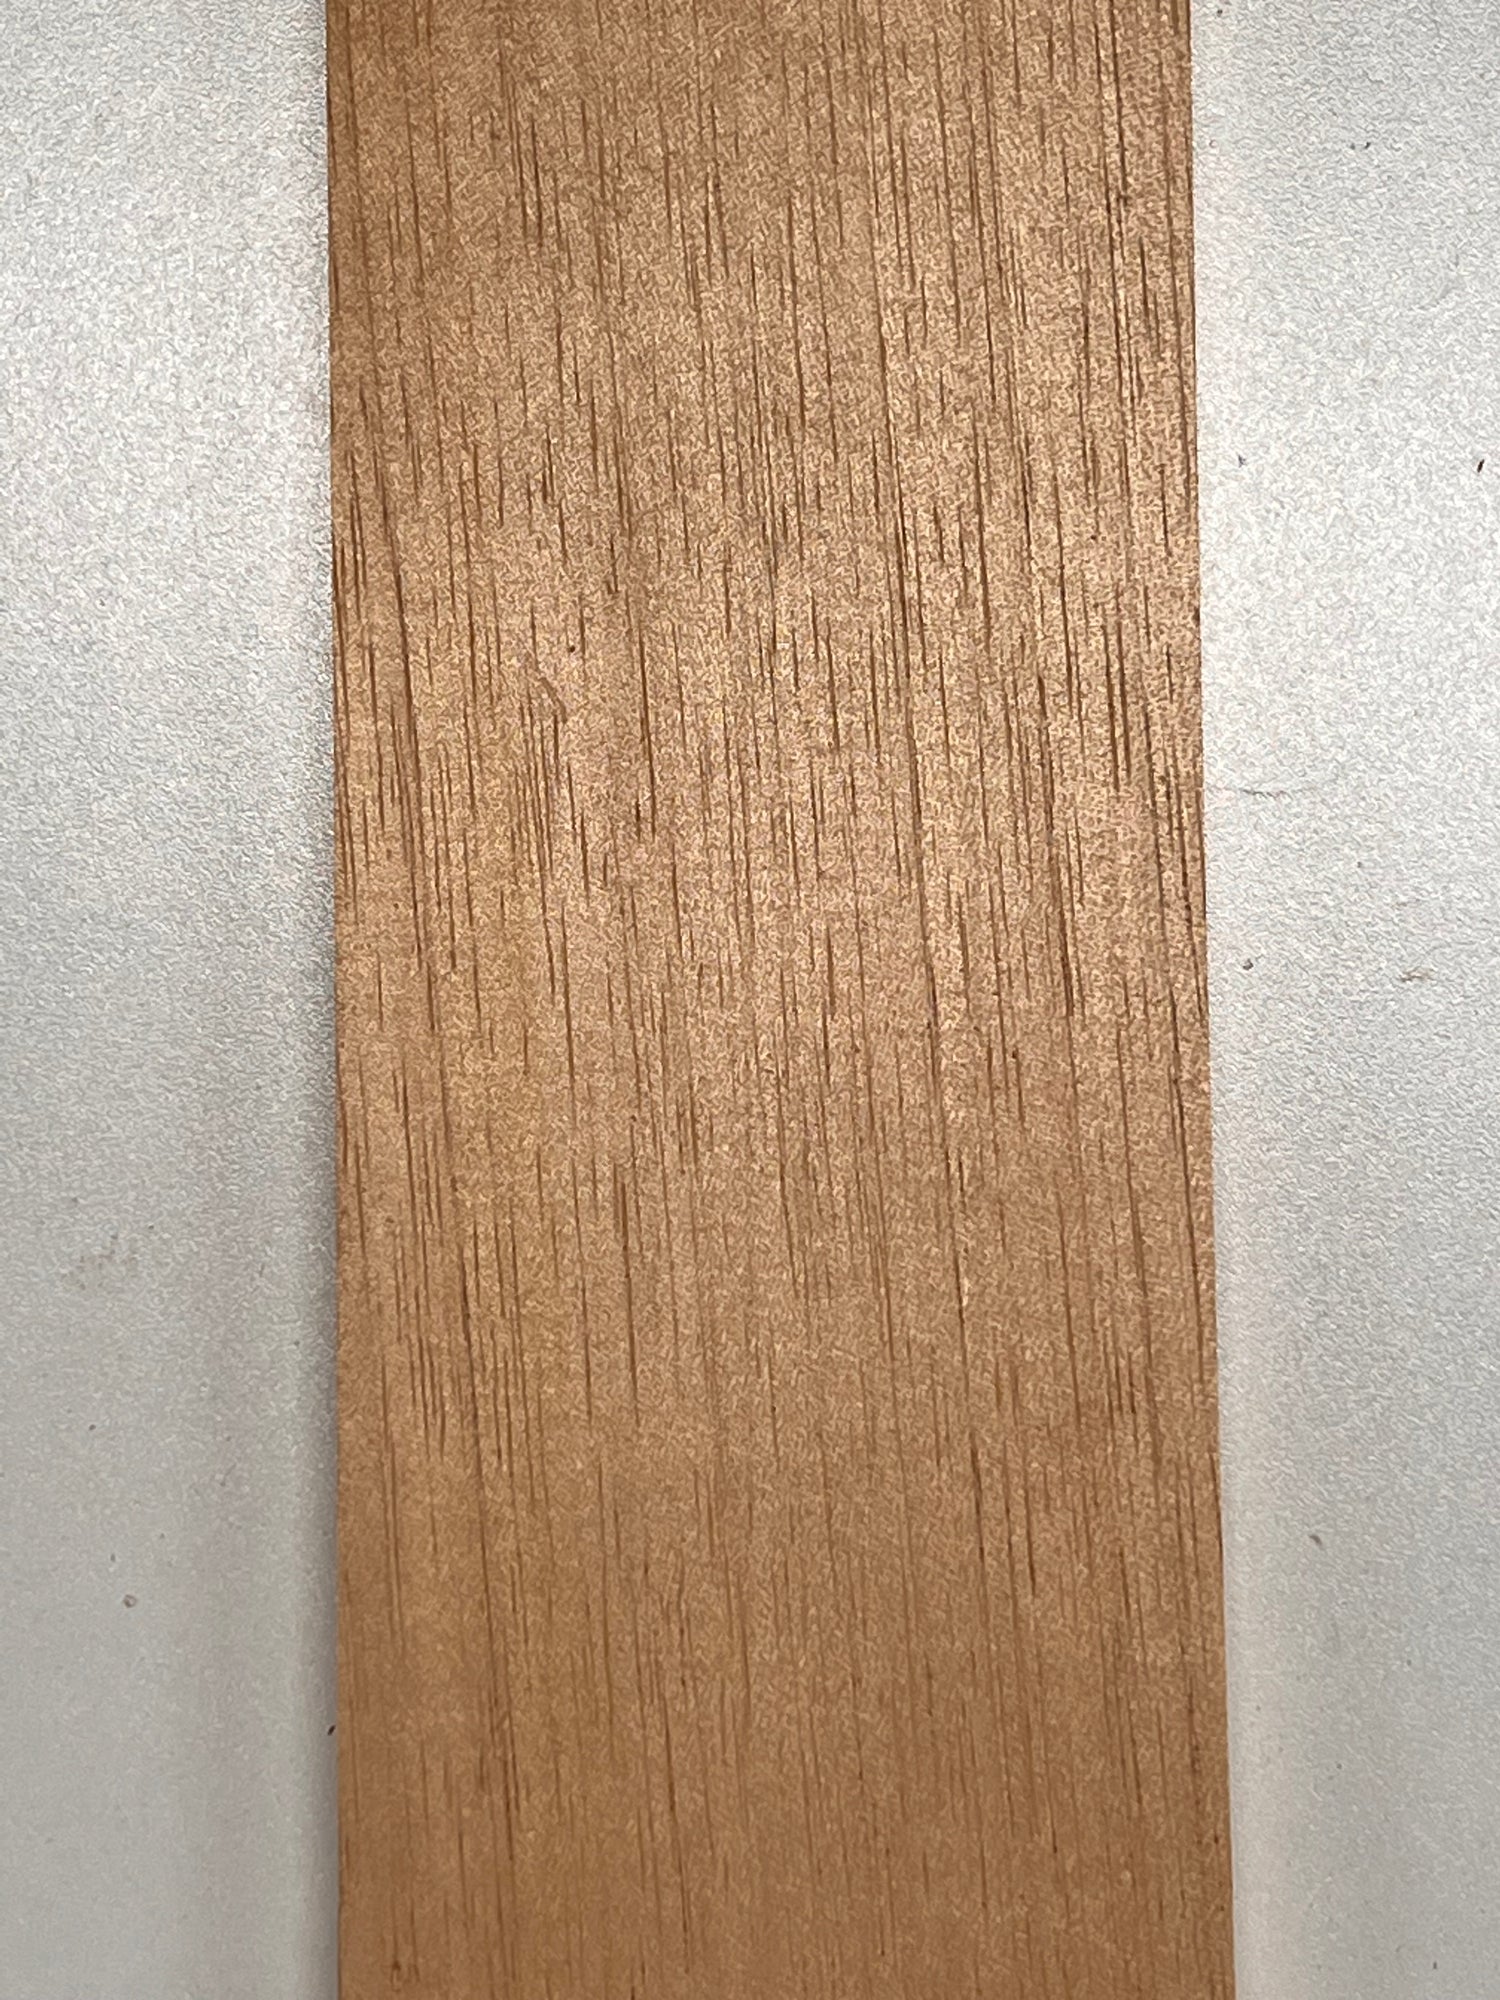 Spanish Cedar Thin Stock Lumber Board Wood Blank